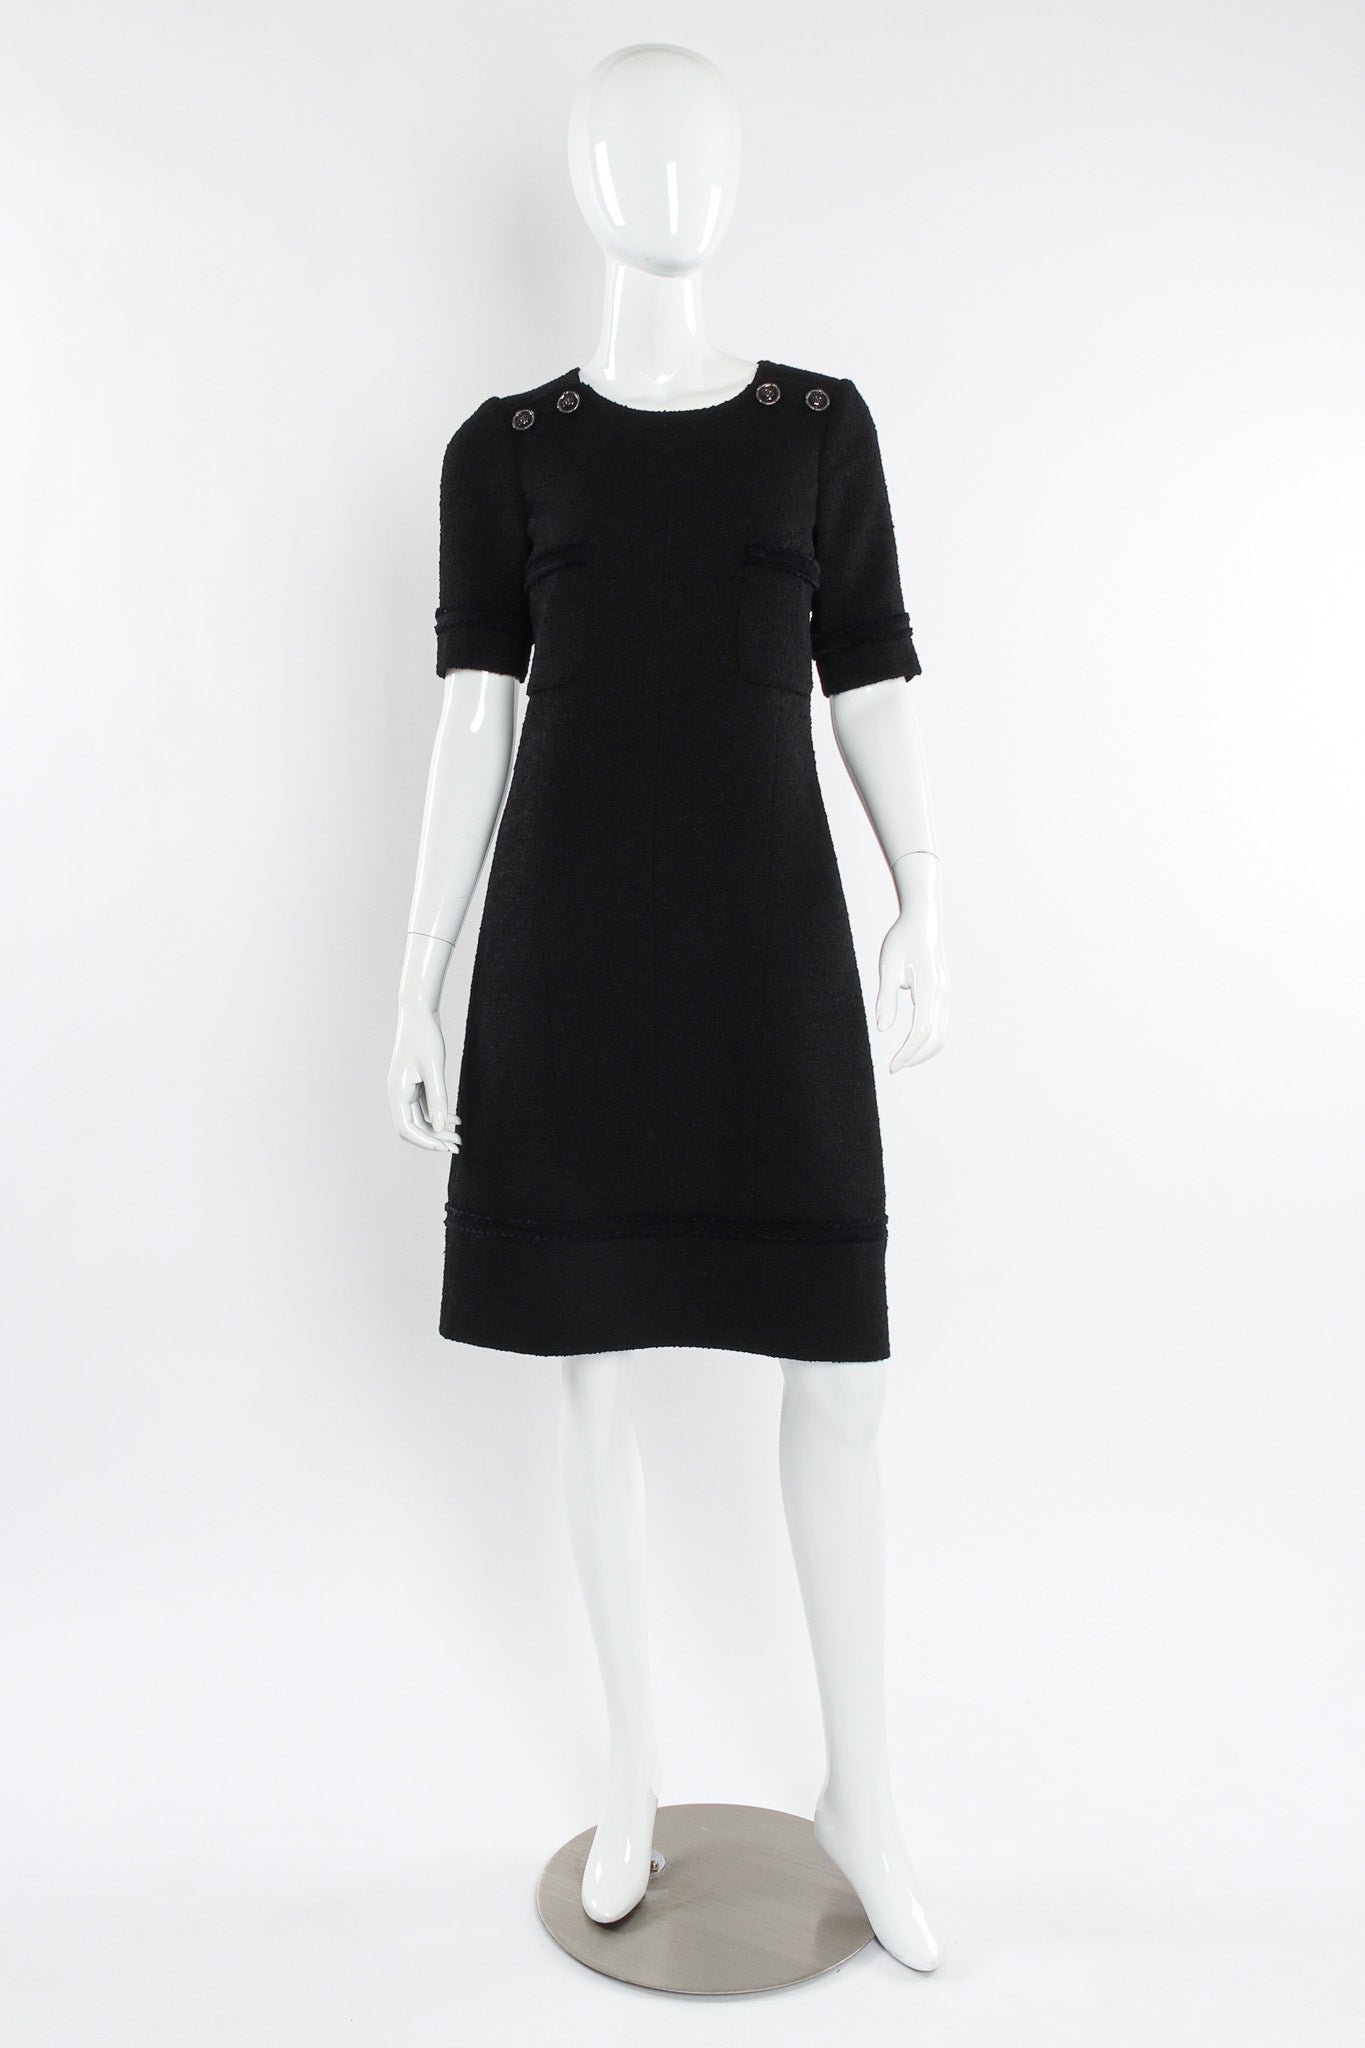 Chanel Black Wool Brooch Embellished Overlay Paneled Dress M Chanel